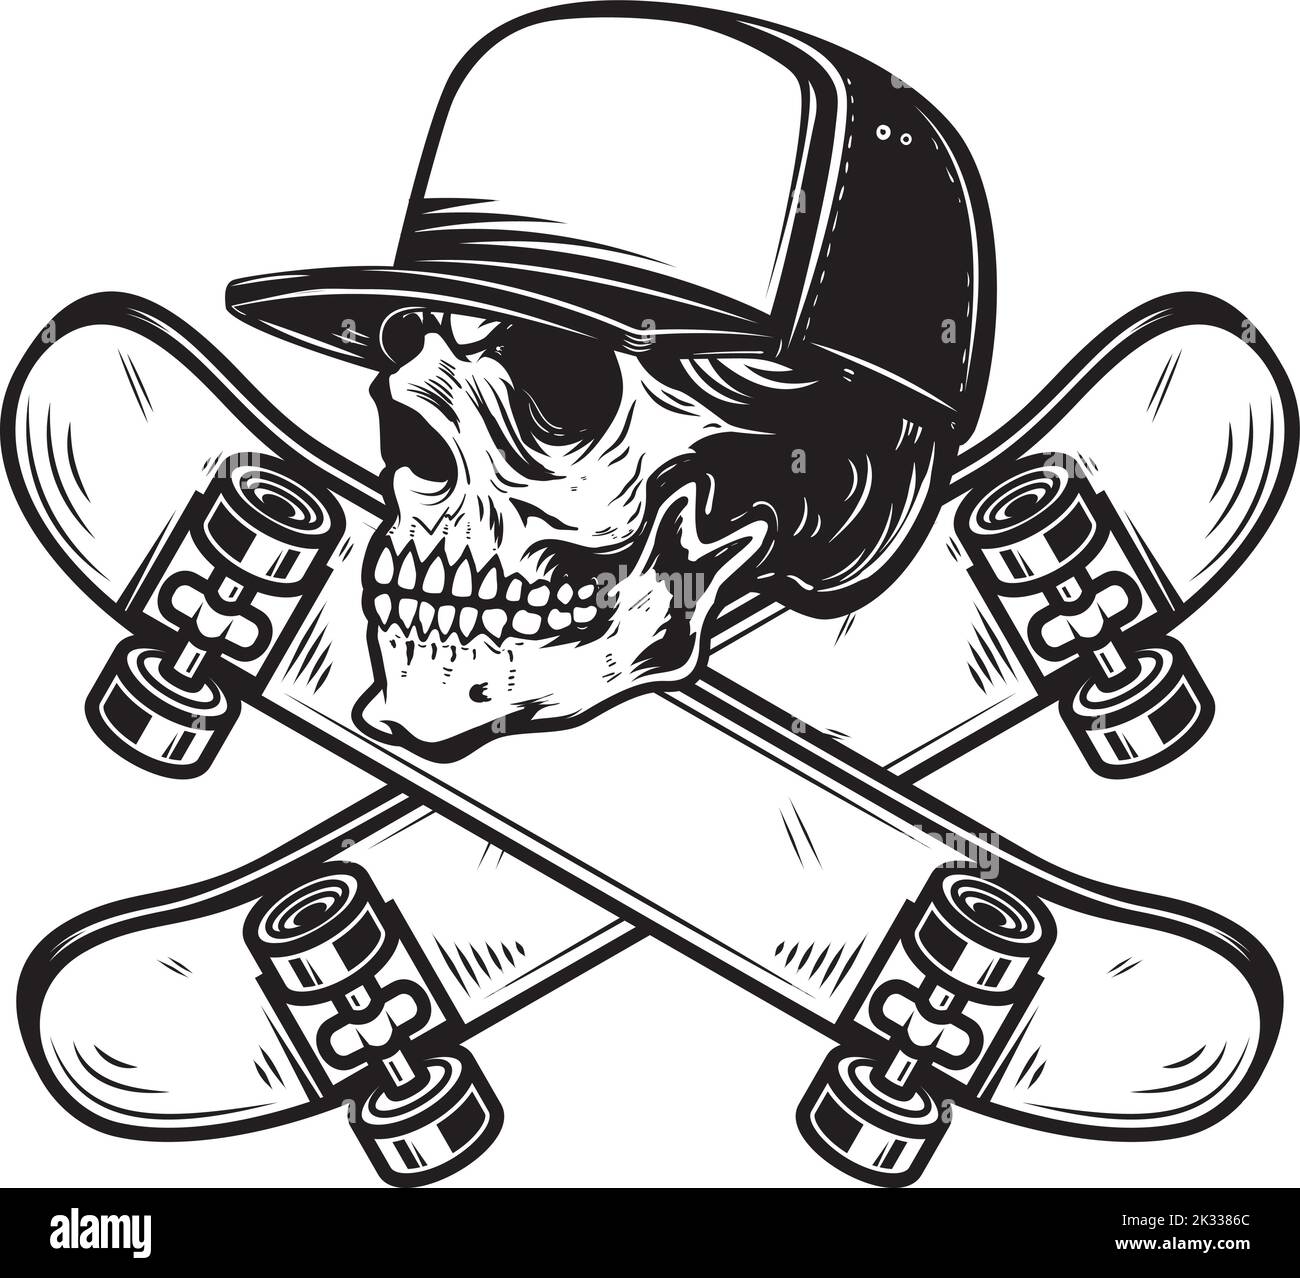 Skateboarder skull with crossed skateboards. Design element for logo, label sign, poster, t shirt. Vector illustration Stock Vector